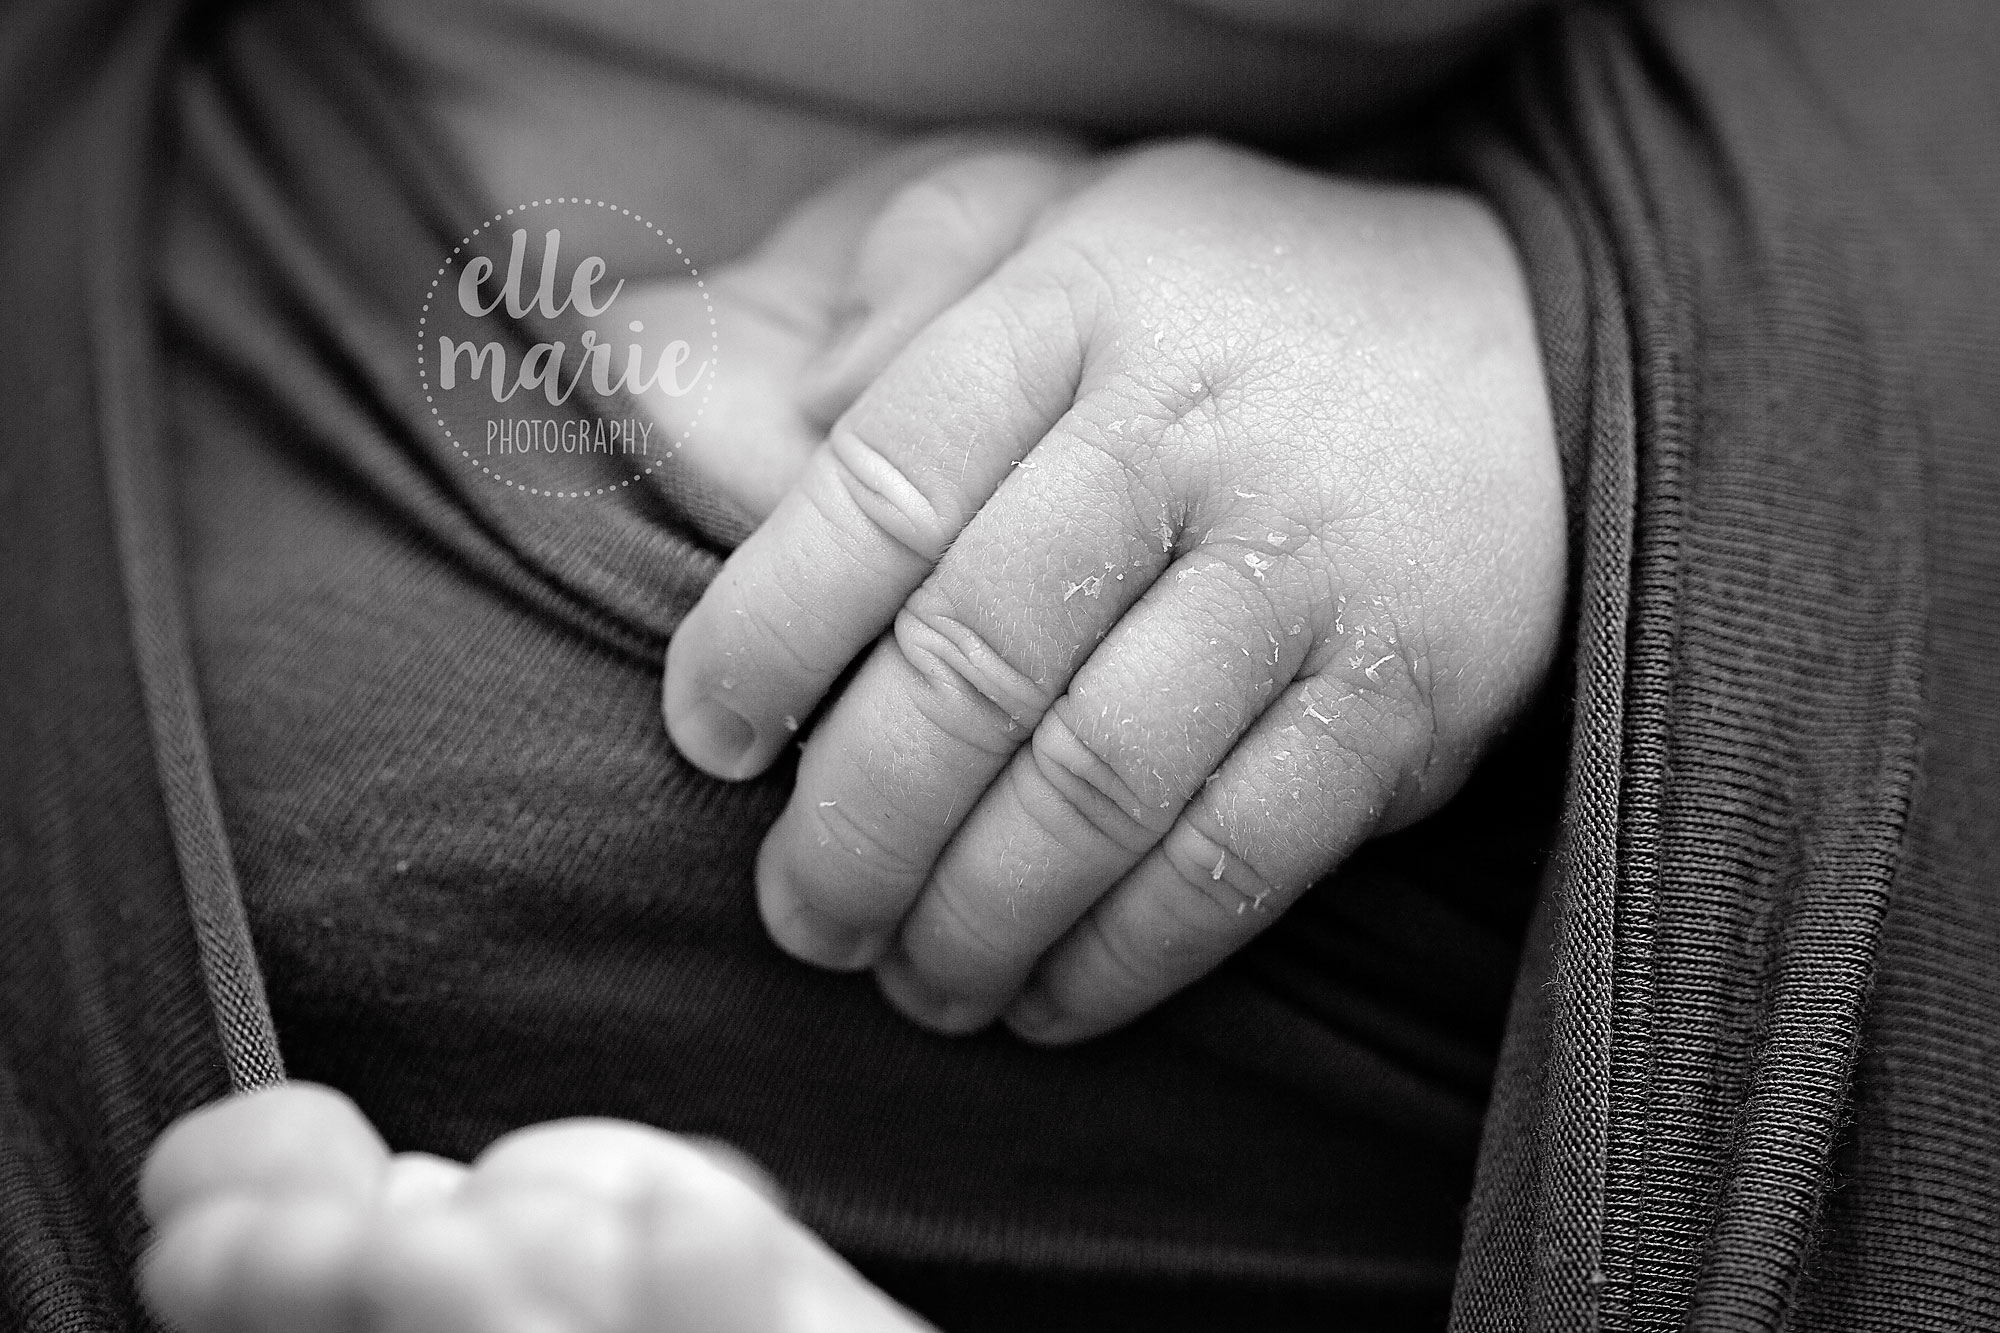 Newborn baby hands in black and white